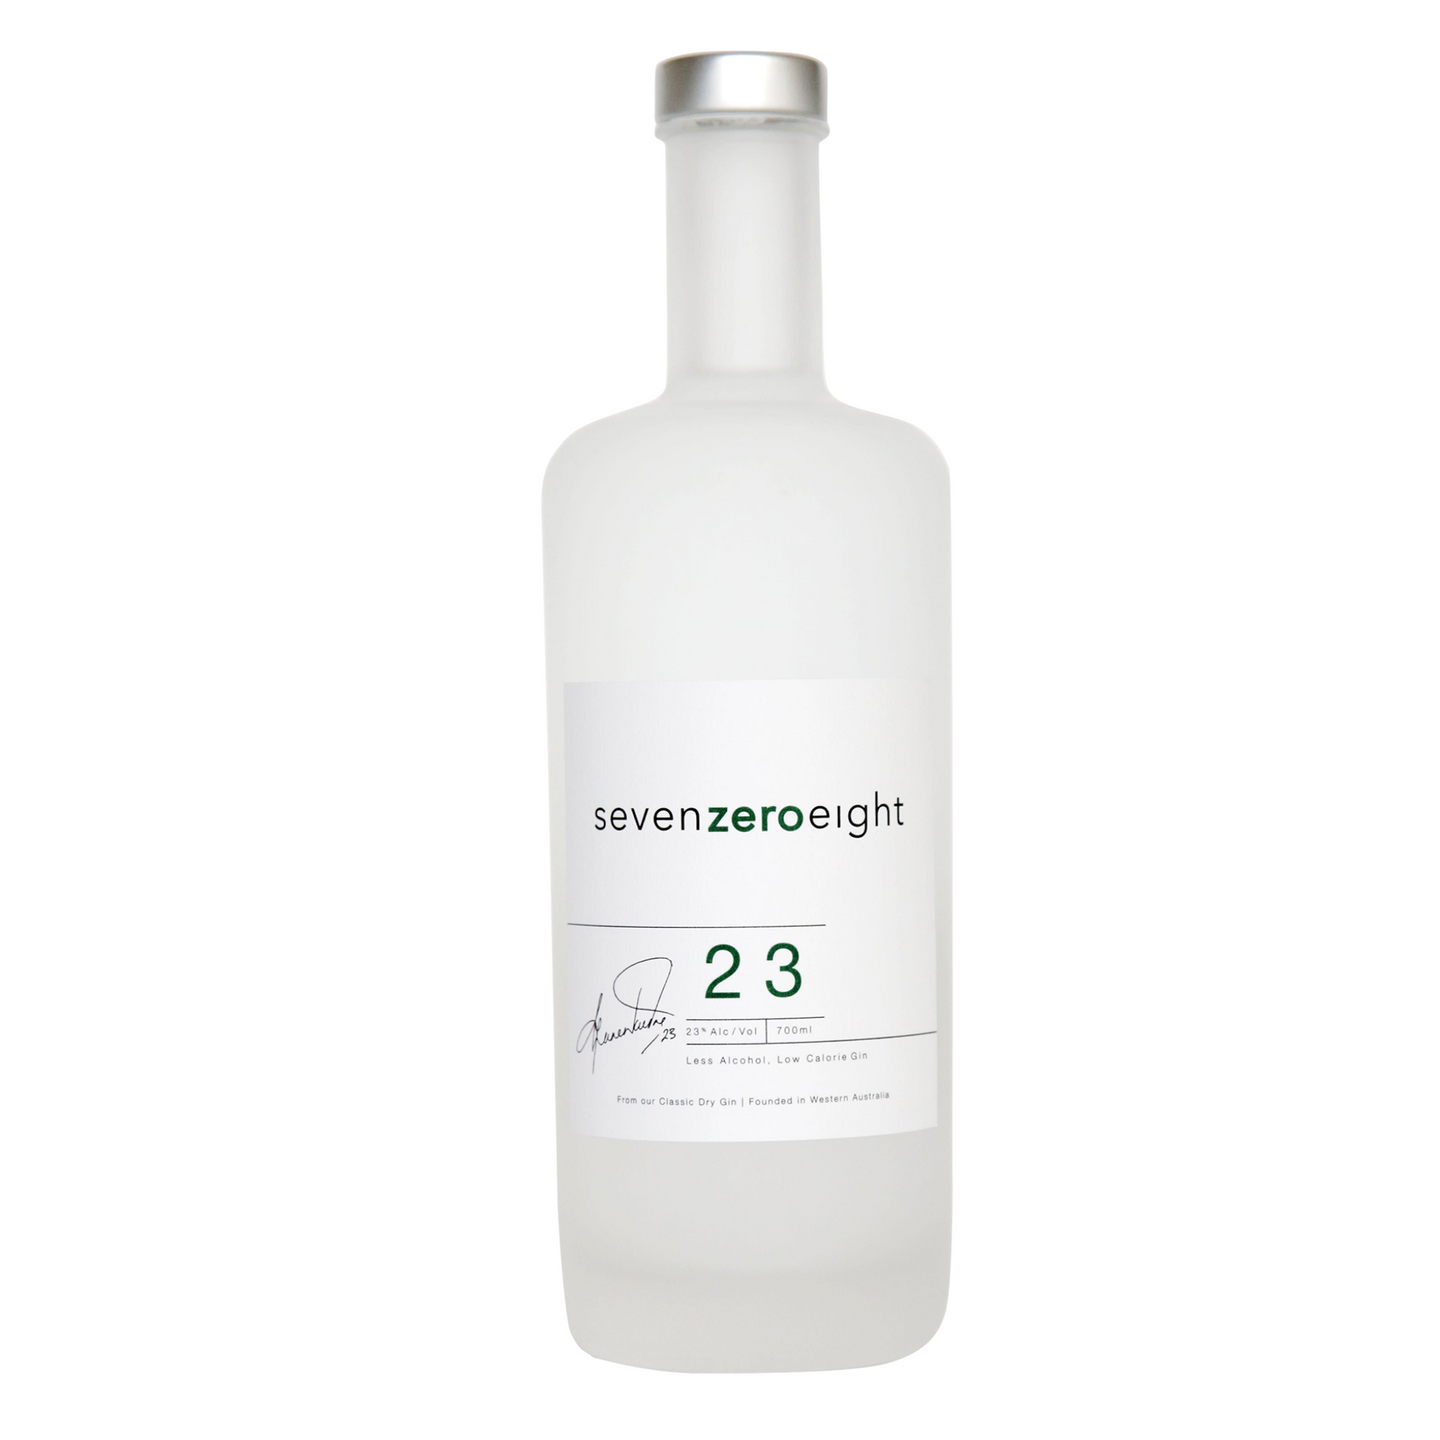 23 Mid-Strength Gin, Australia